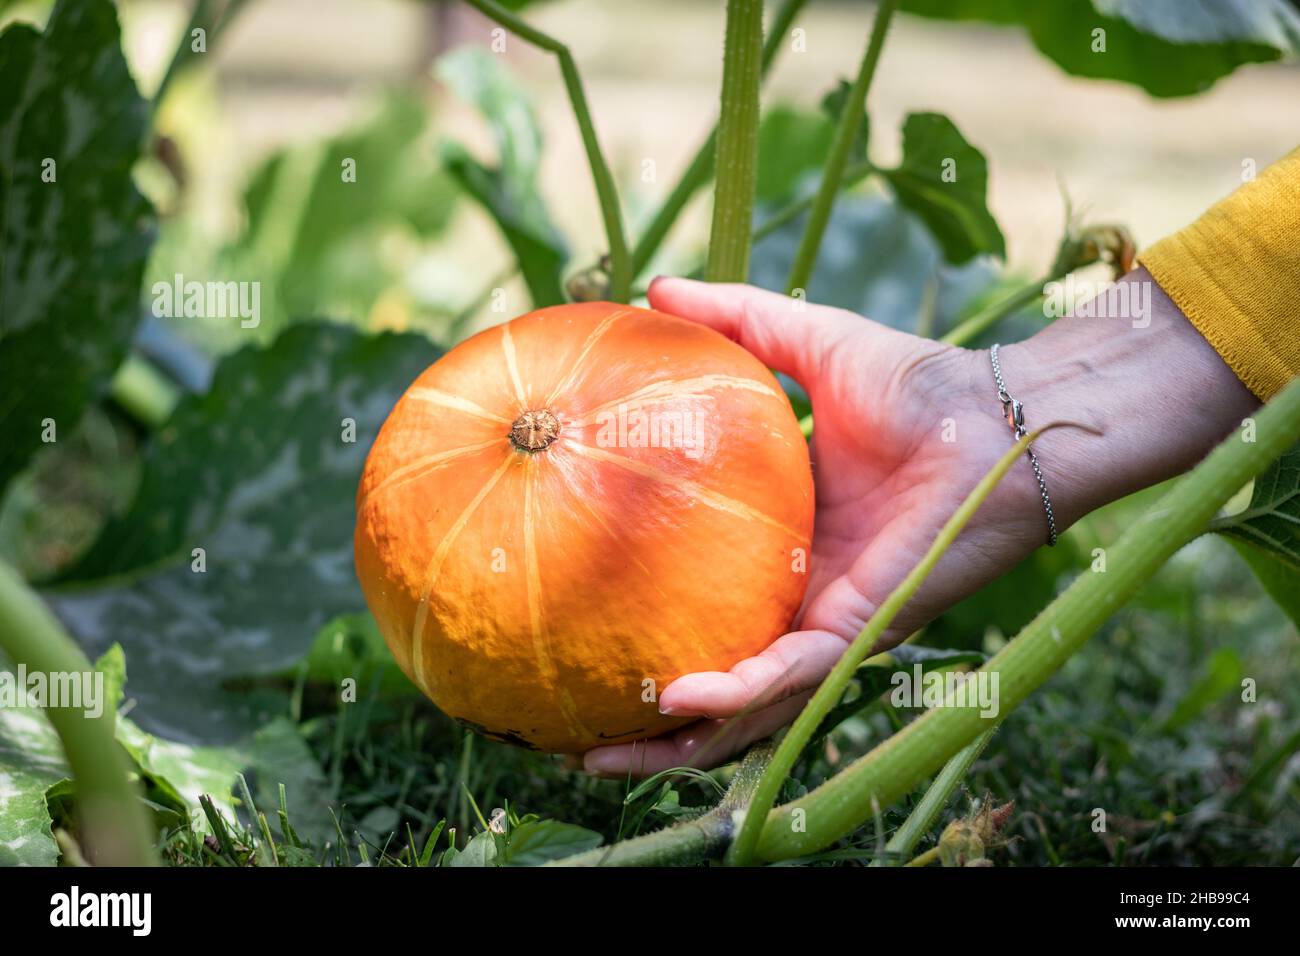 Harvesting pumpkin hokkaido in organic garden. Female hand picking up ripe pumpkin vegetable at agricultural field Stock Photo